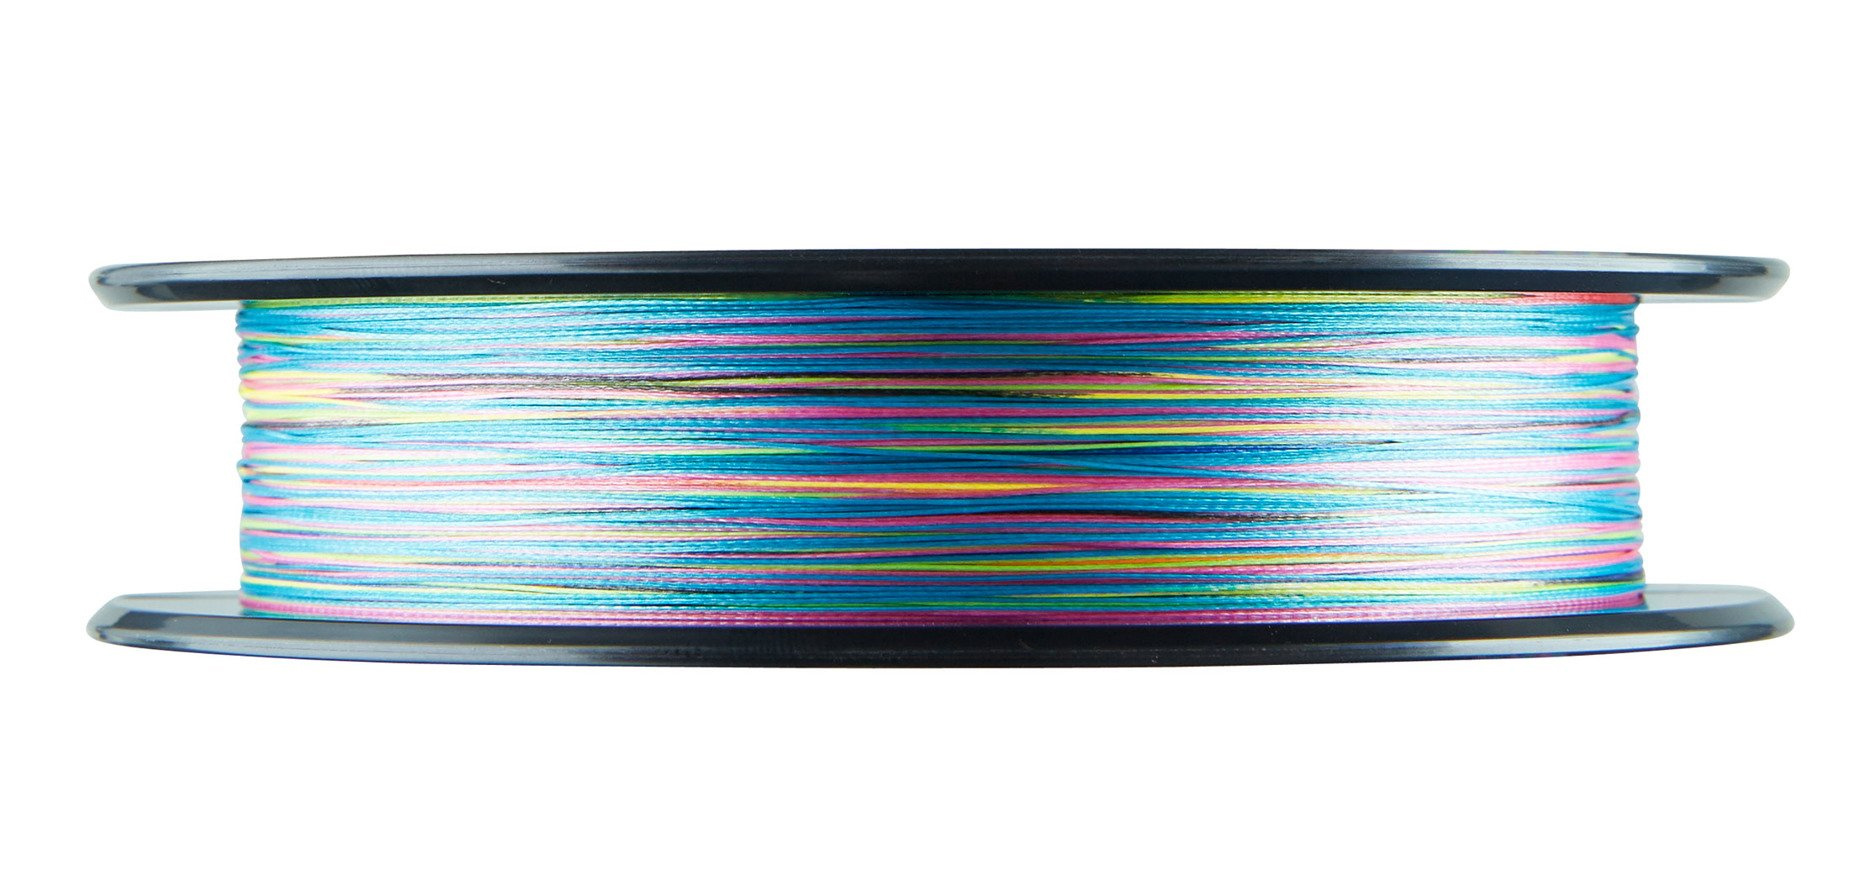 Tresse DAIWA J Braid Grand X8 multicolore 300m